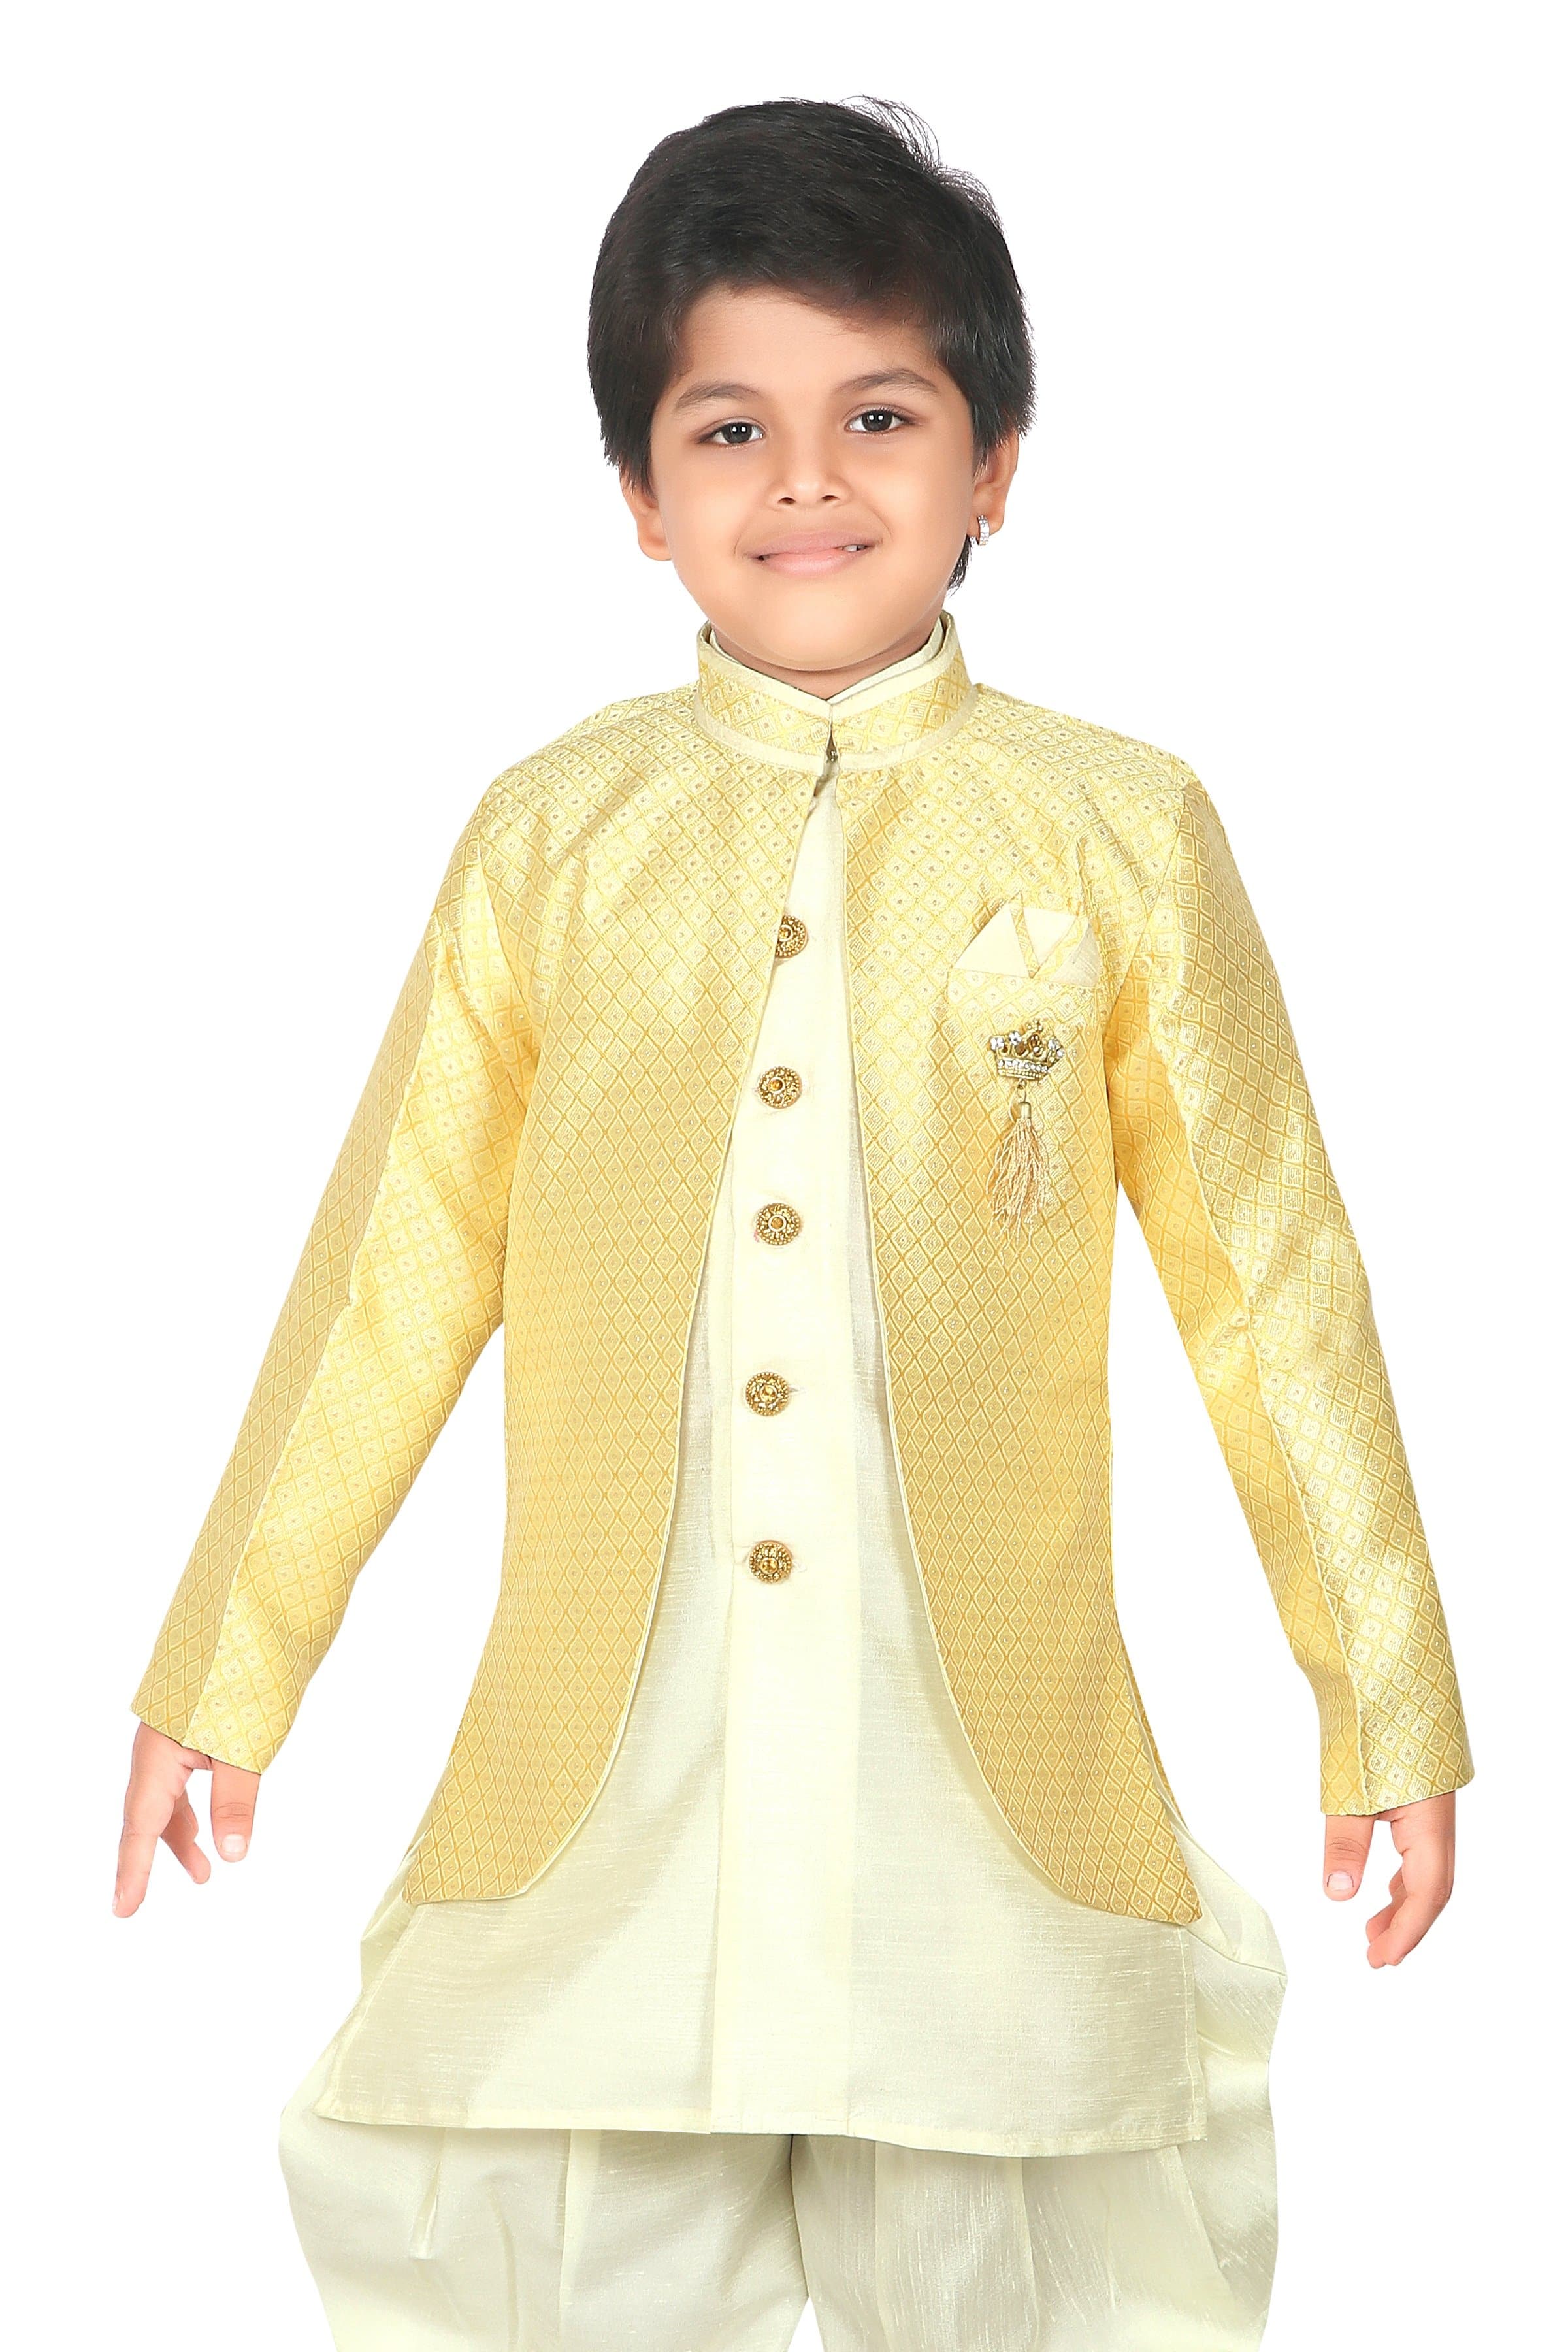 Buy Jeetethnics Boys Yellow Kurta Set with Dhoti Pants (3066) at Amazon.in